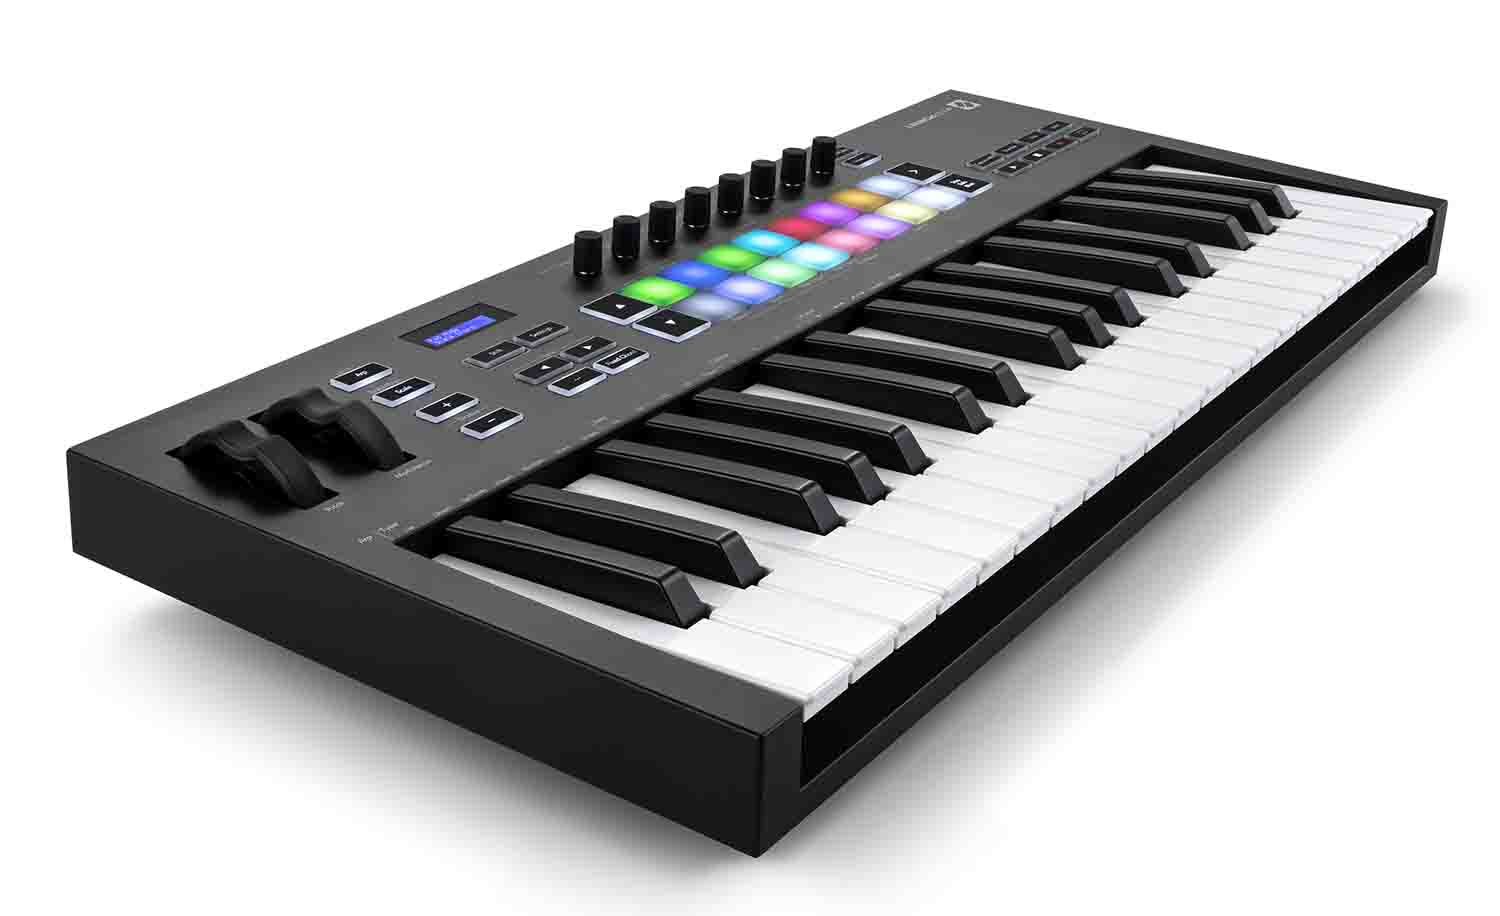 Novation Launchkey 37 MK3 MIDI Keyboard Controller - Hollywood DJ